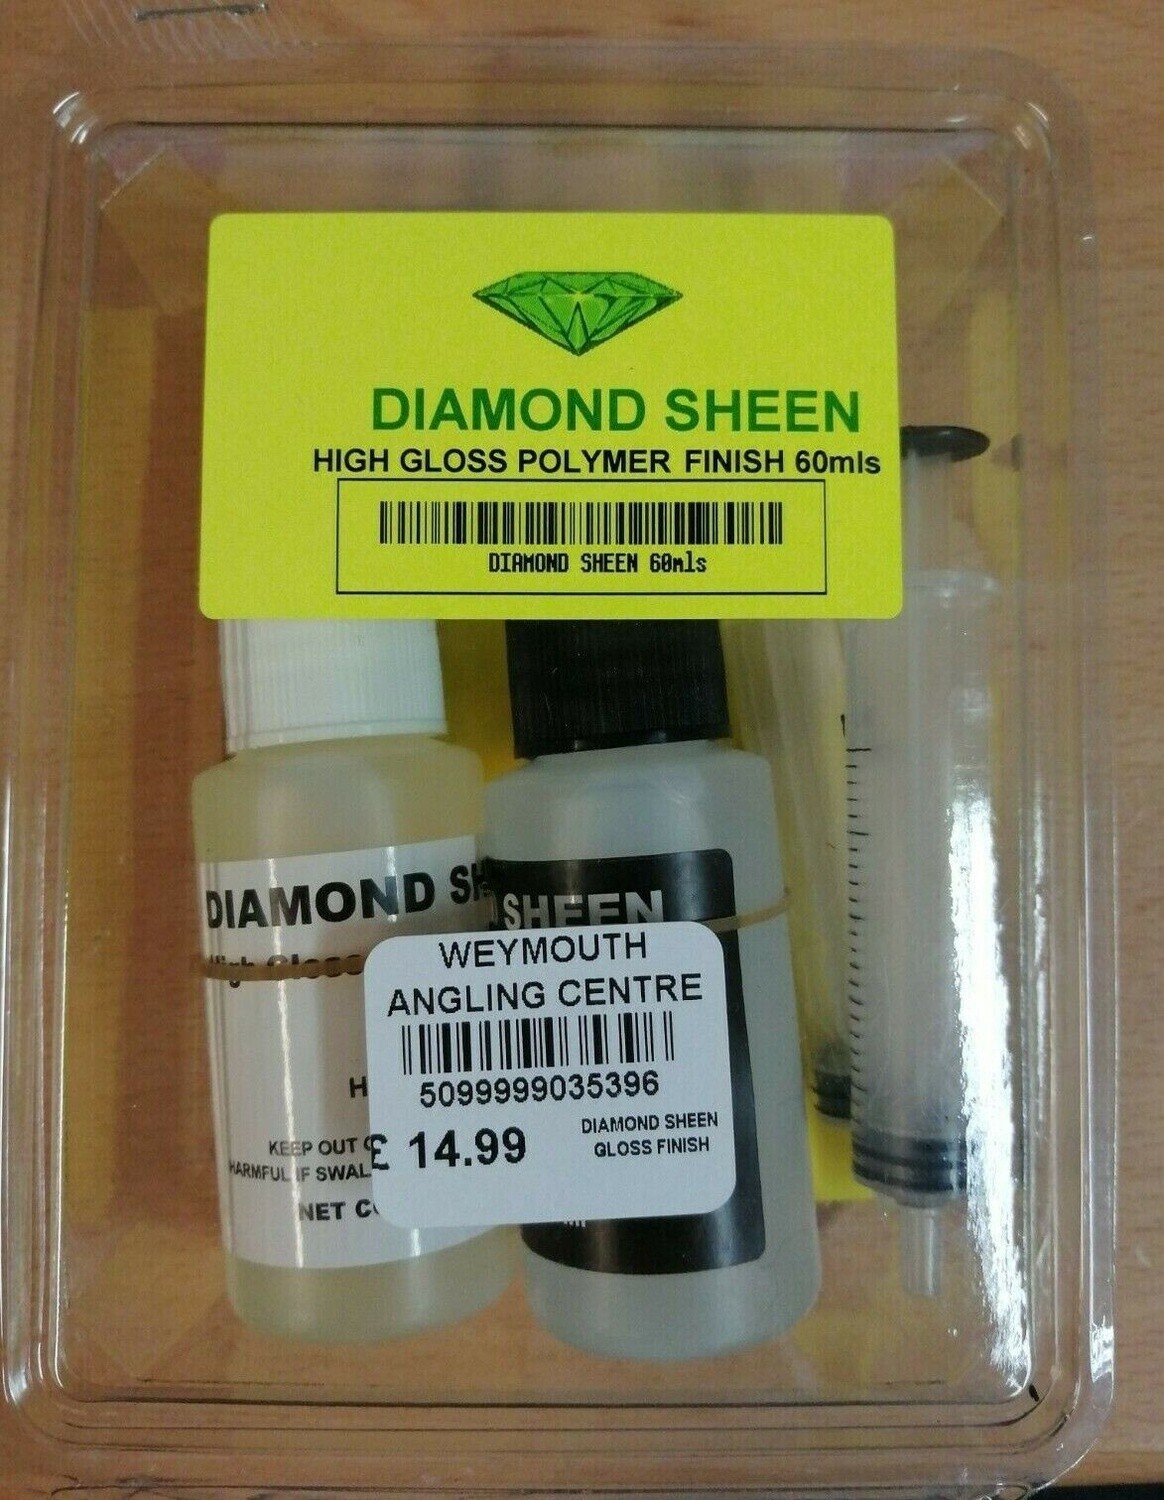 Diamond Sheen High Gloss Polymer Finish